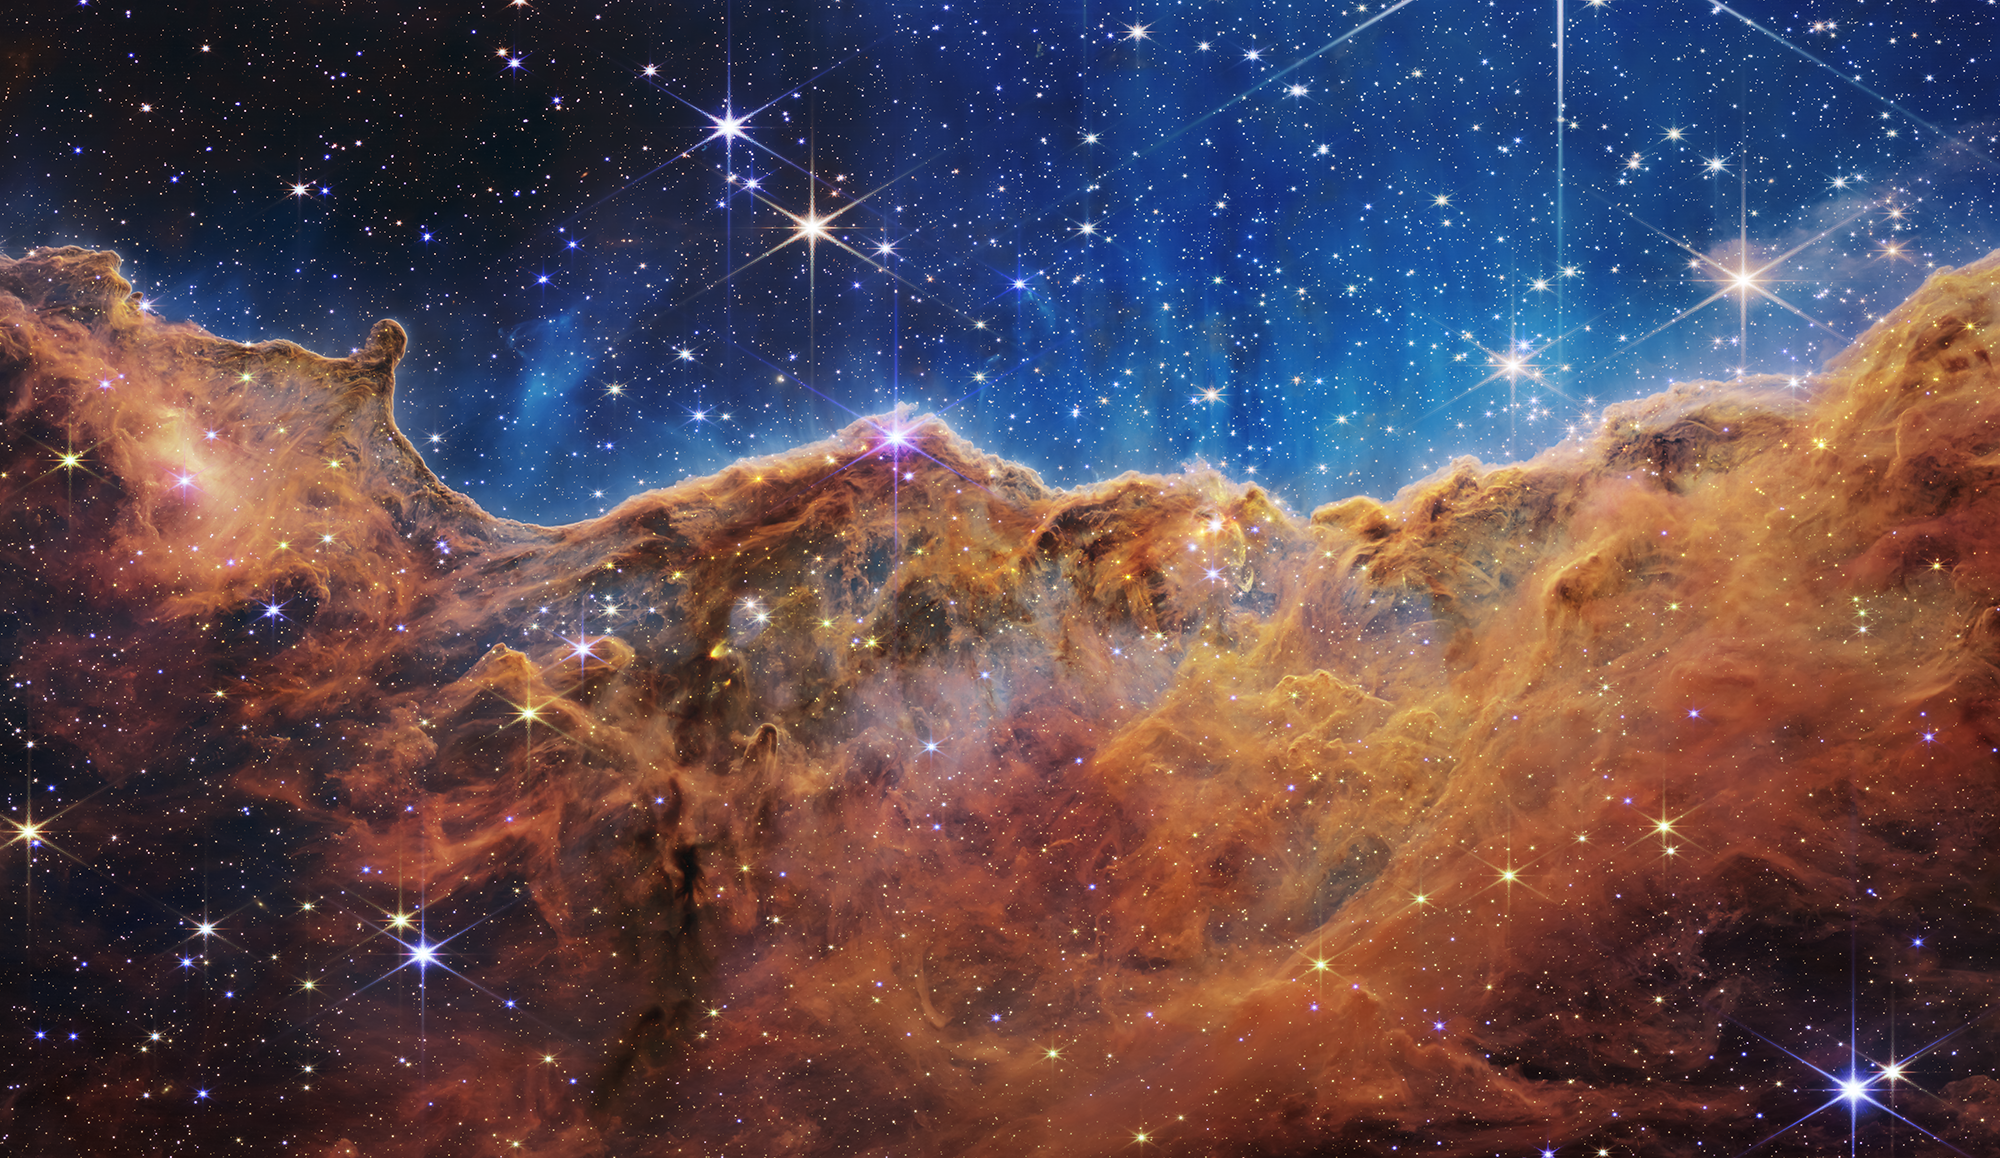 star forming region of the Carina Nebula